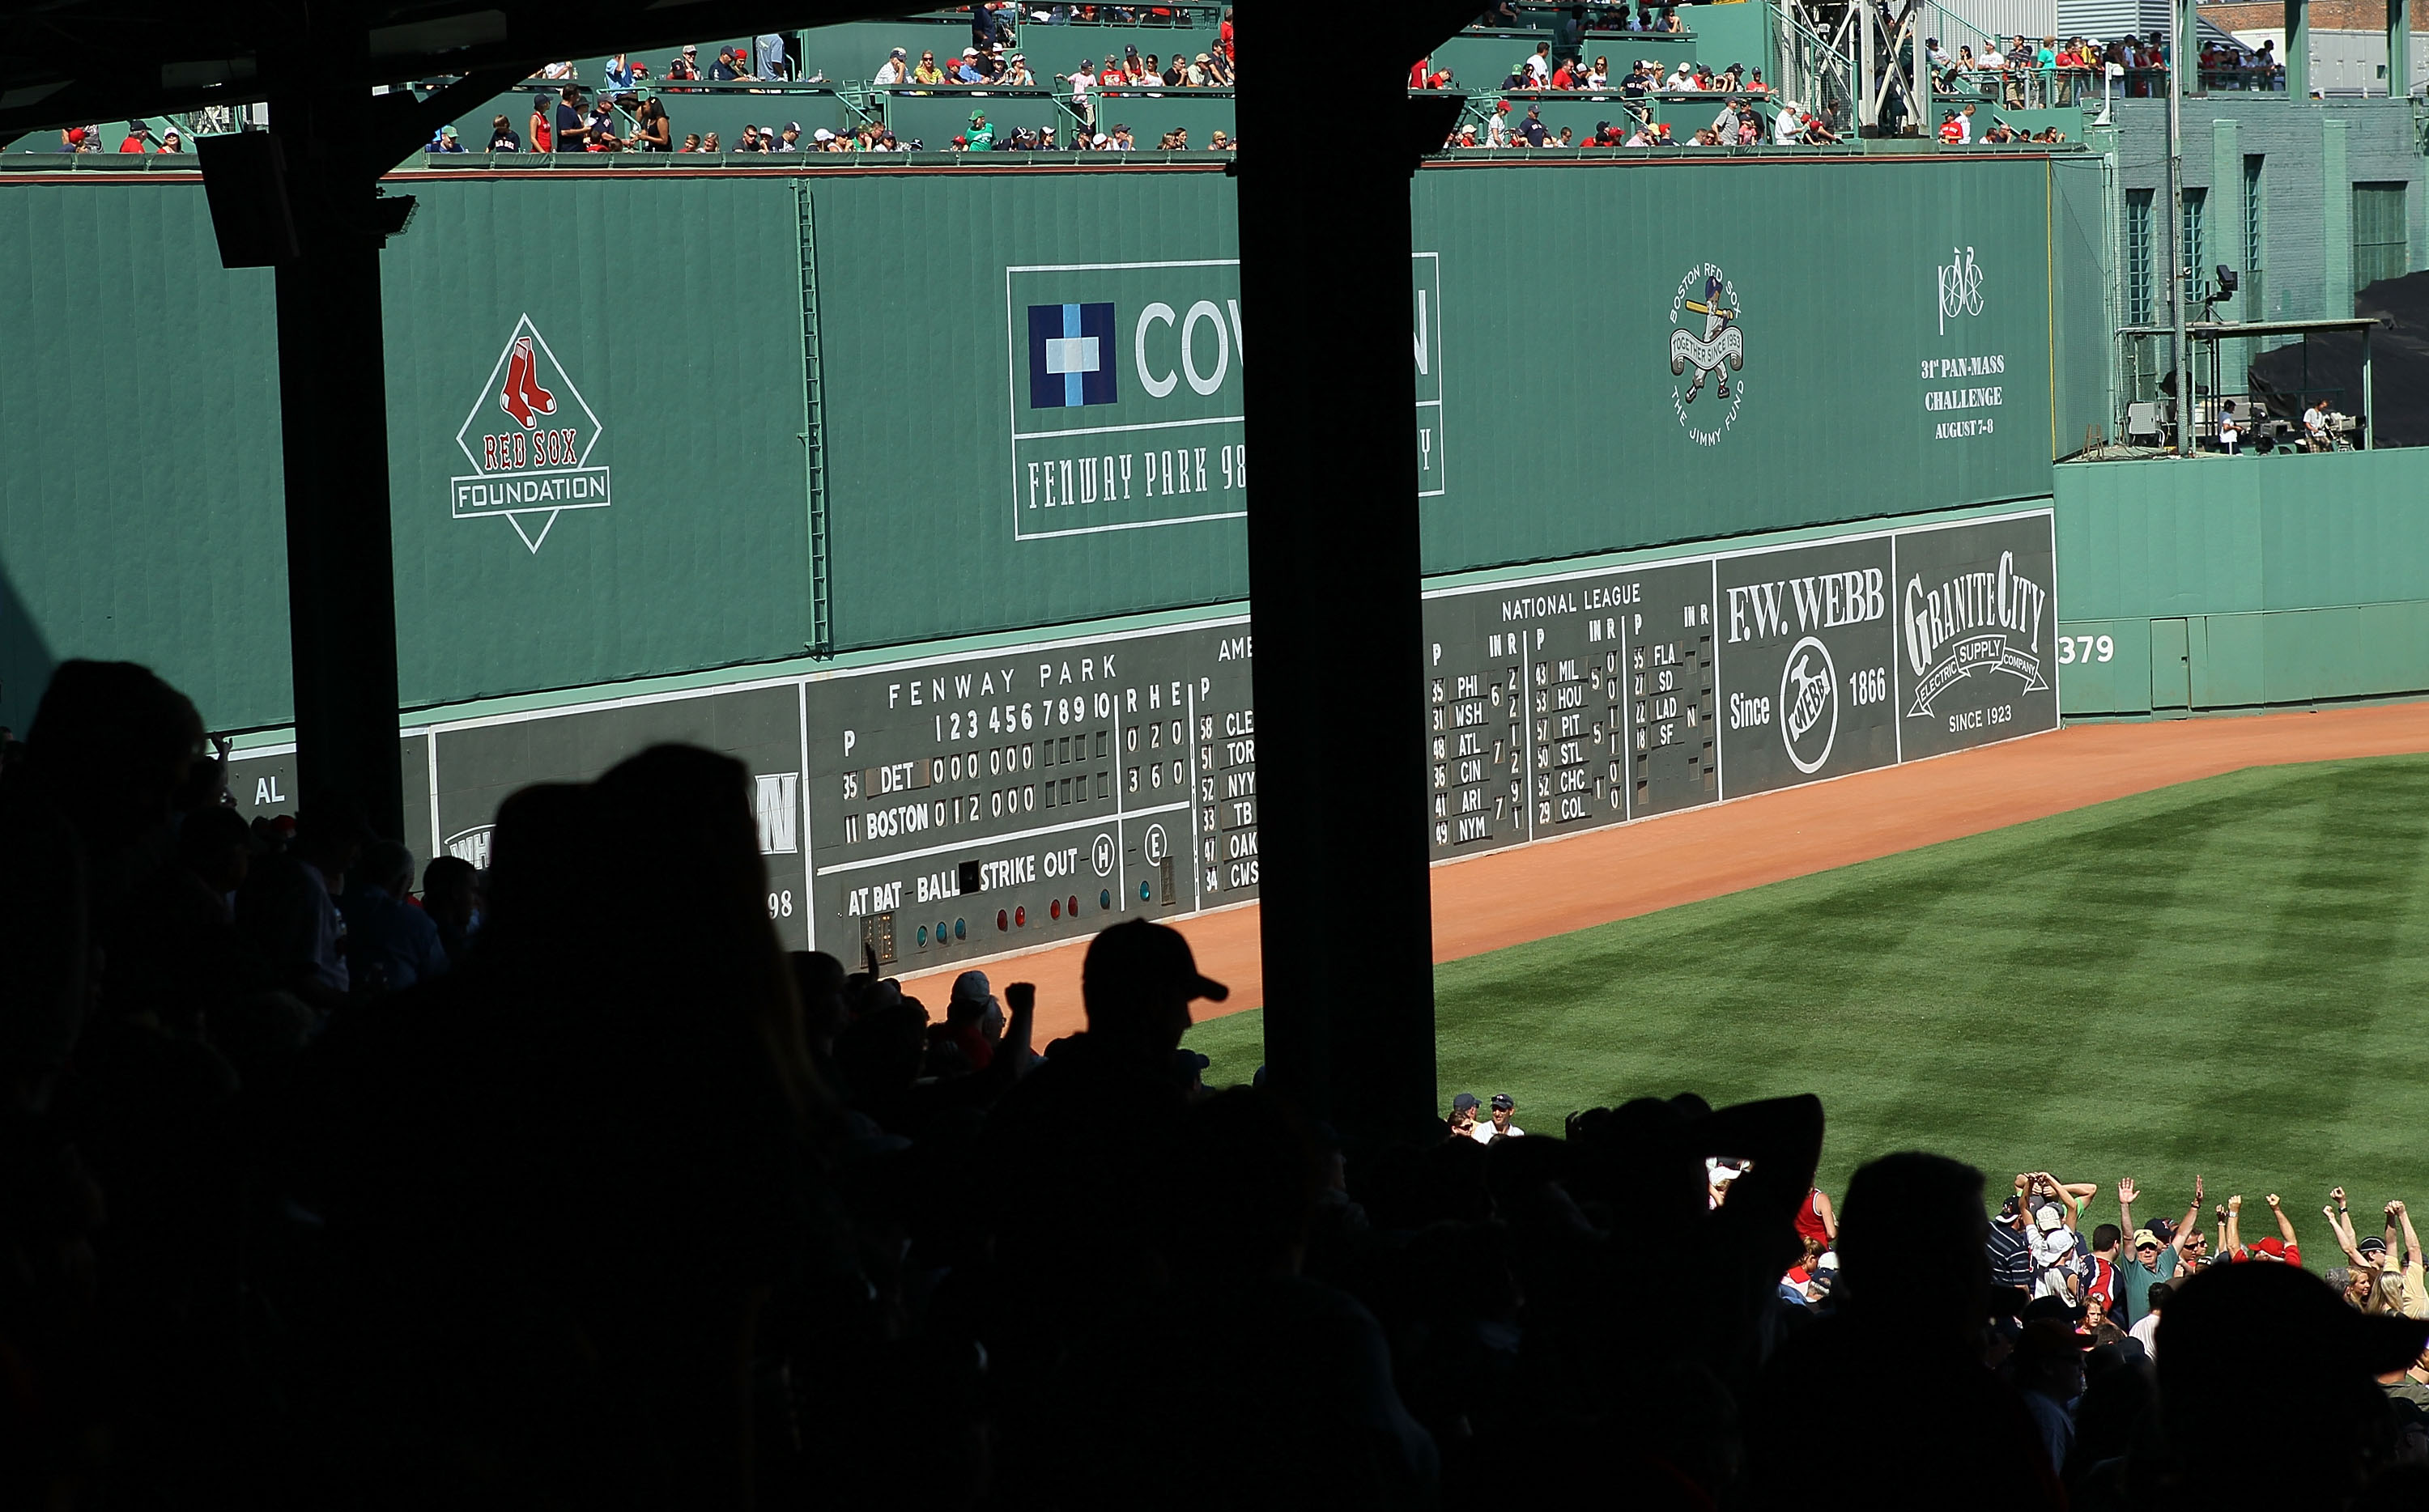 White Sox's problems bigger than ballpark: Dan McGrath